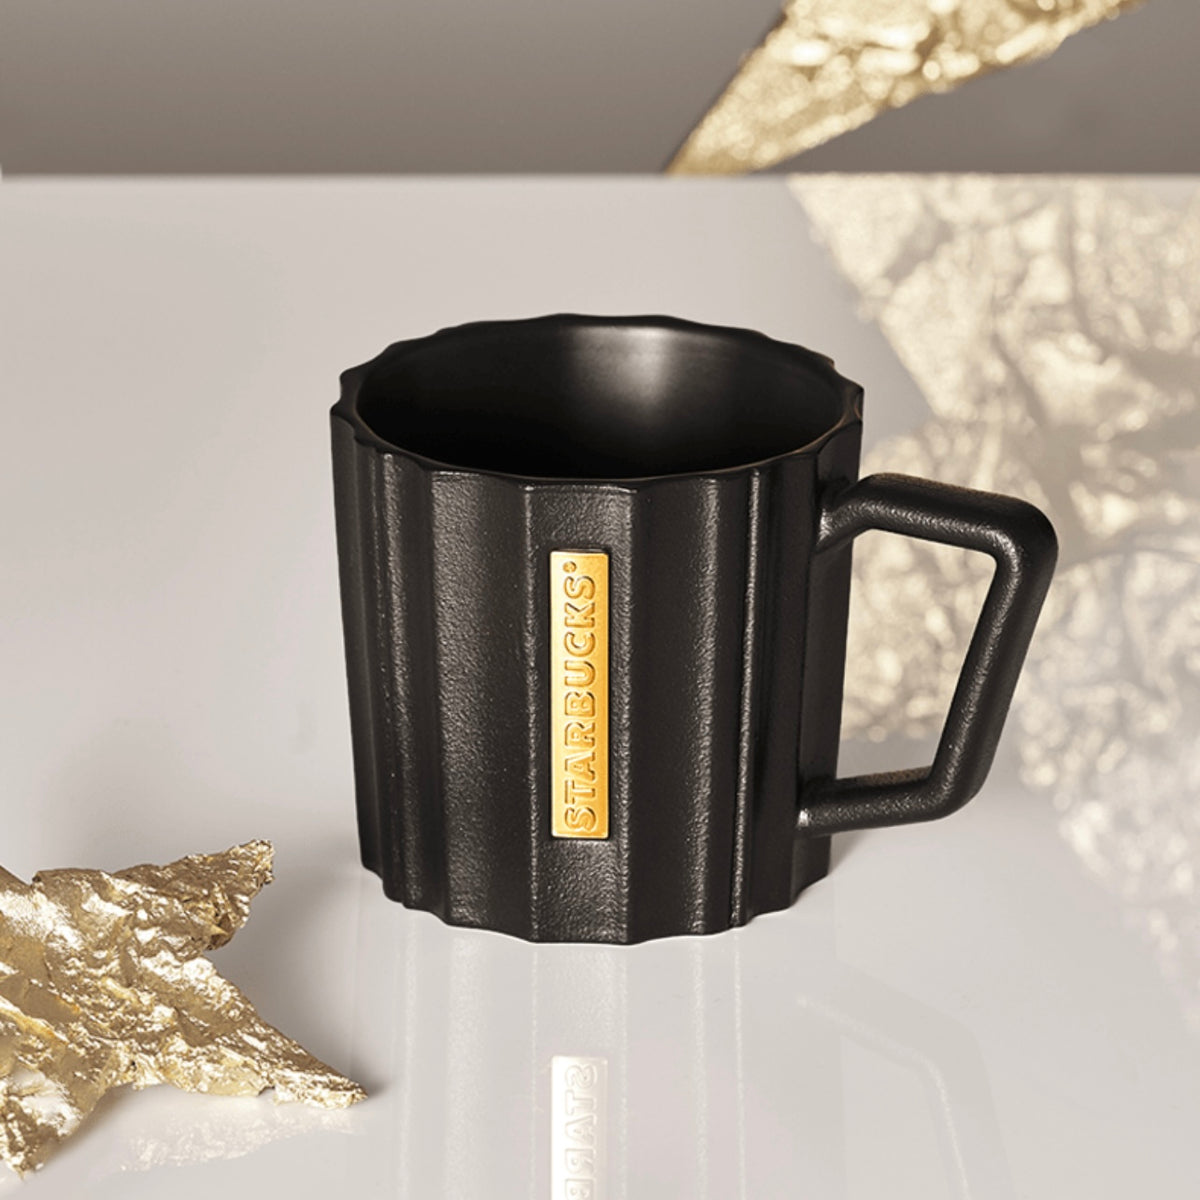 Starbucks Ceramic Handle Mug - Black, 12 oz - Fry's Food Stores